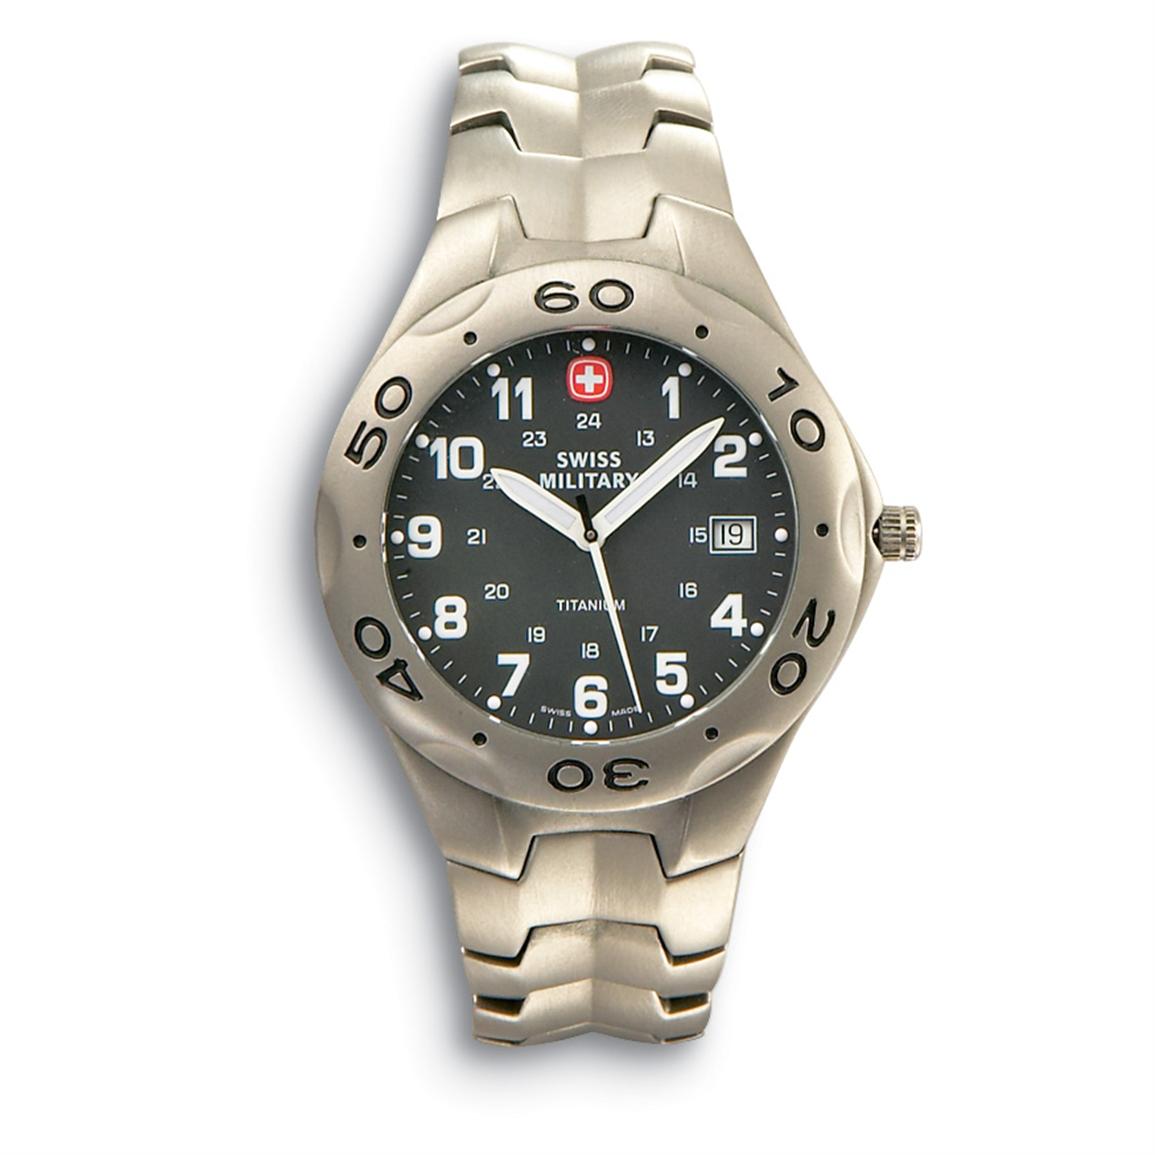 Wenger® Eiger Titanium Watch - 96763, Watches at Sportsman's Guide